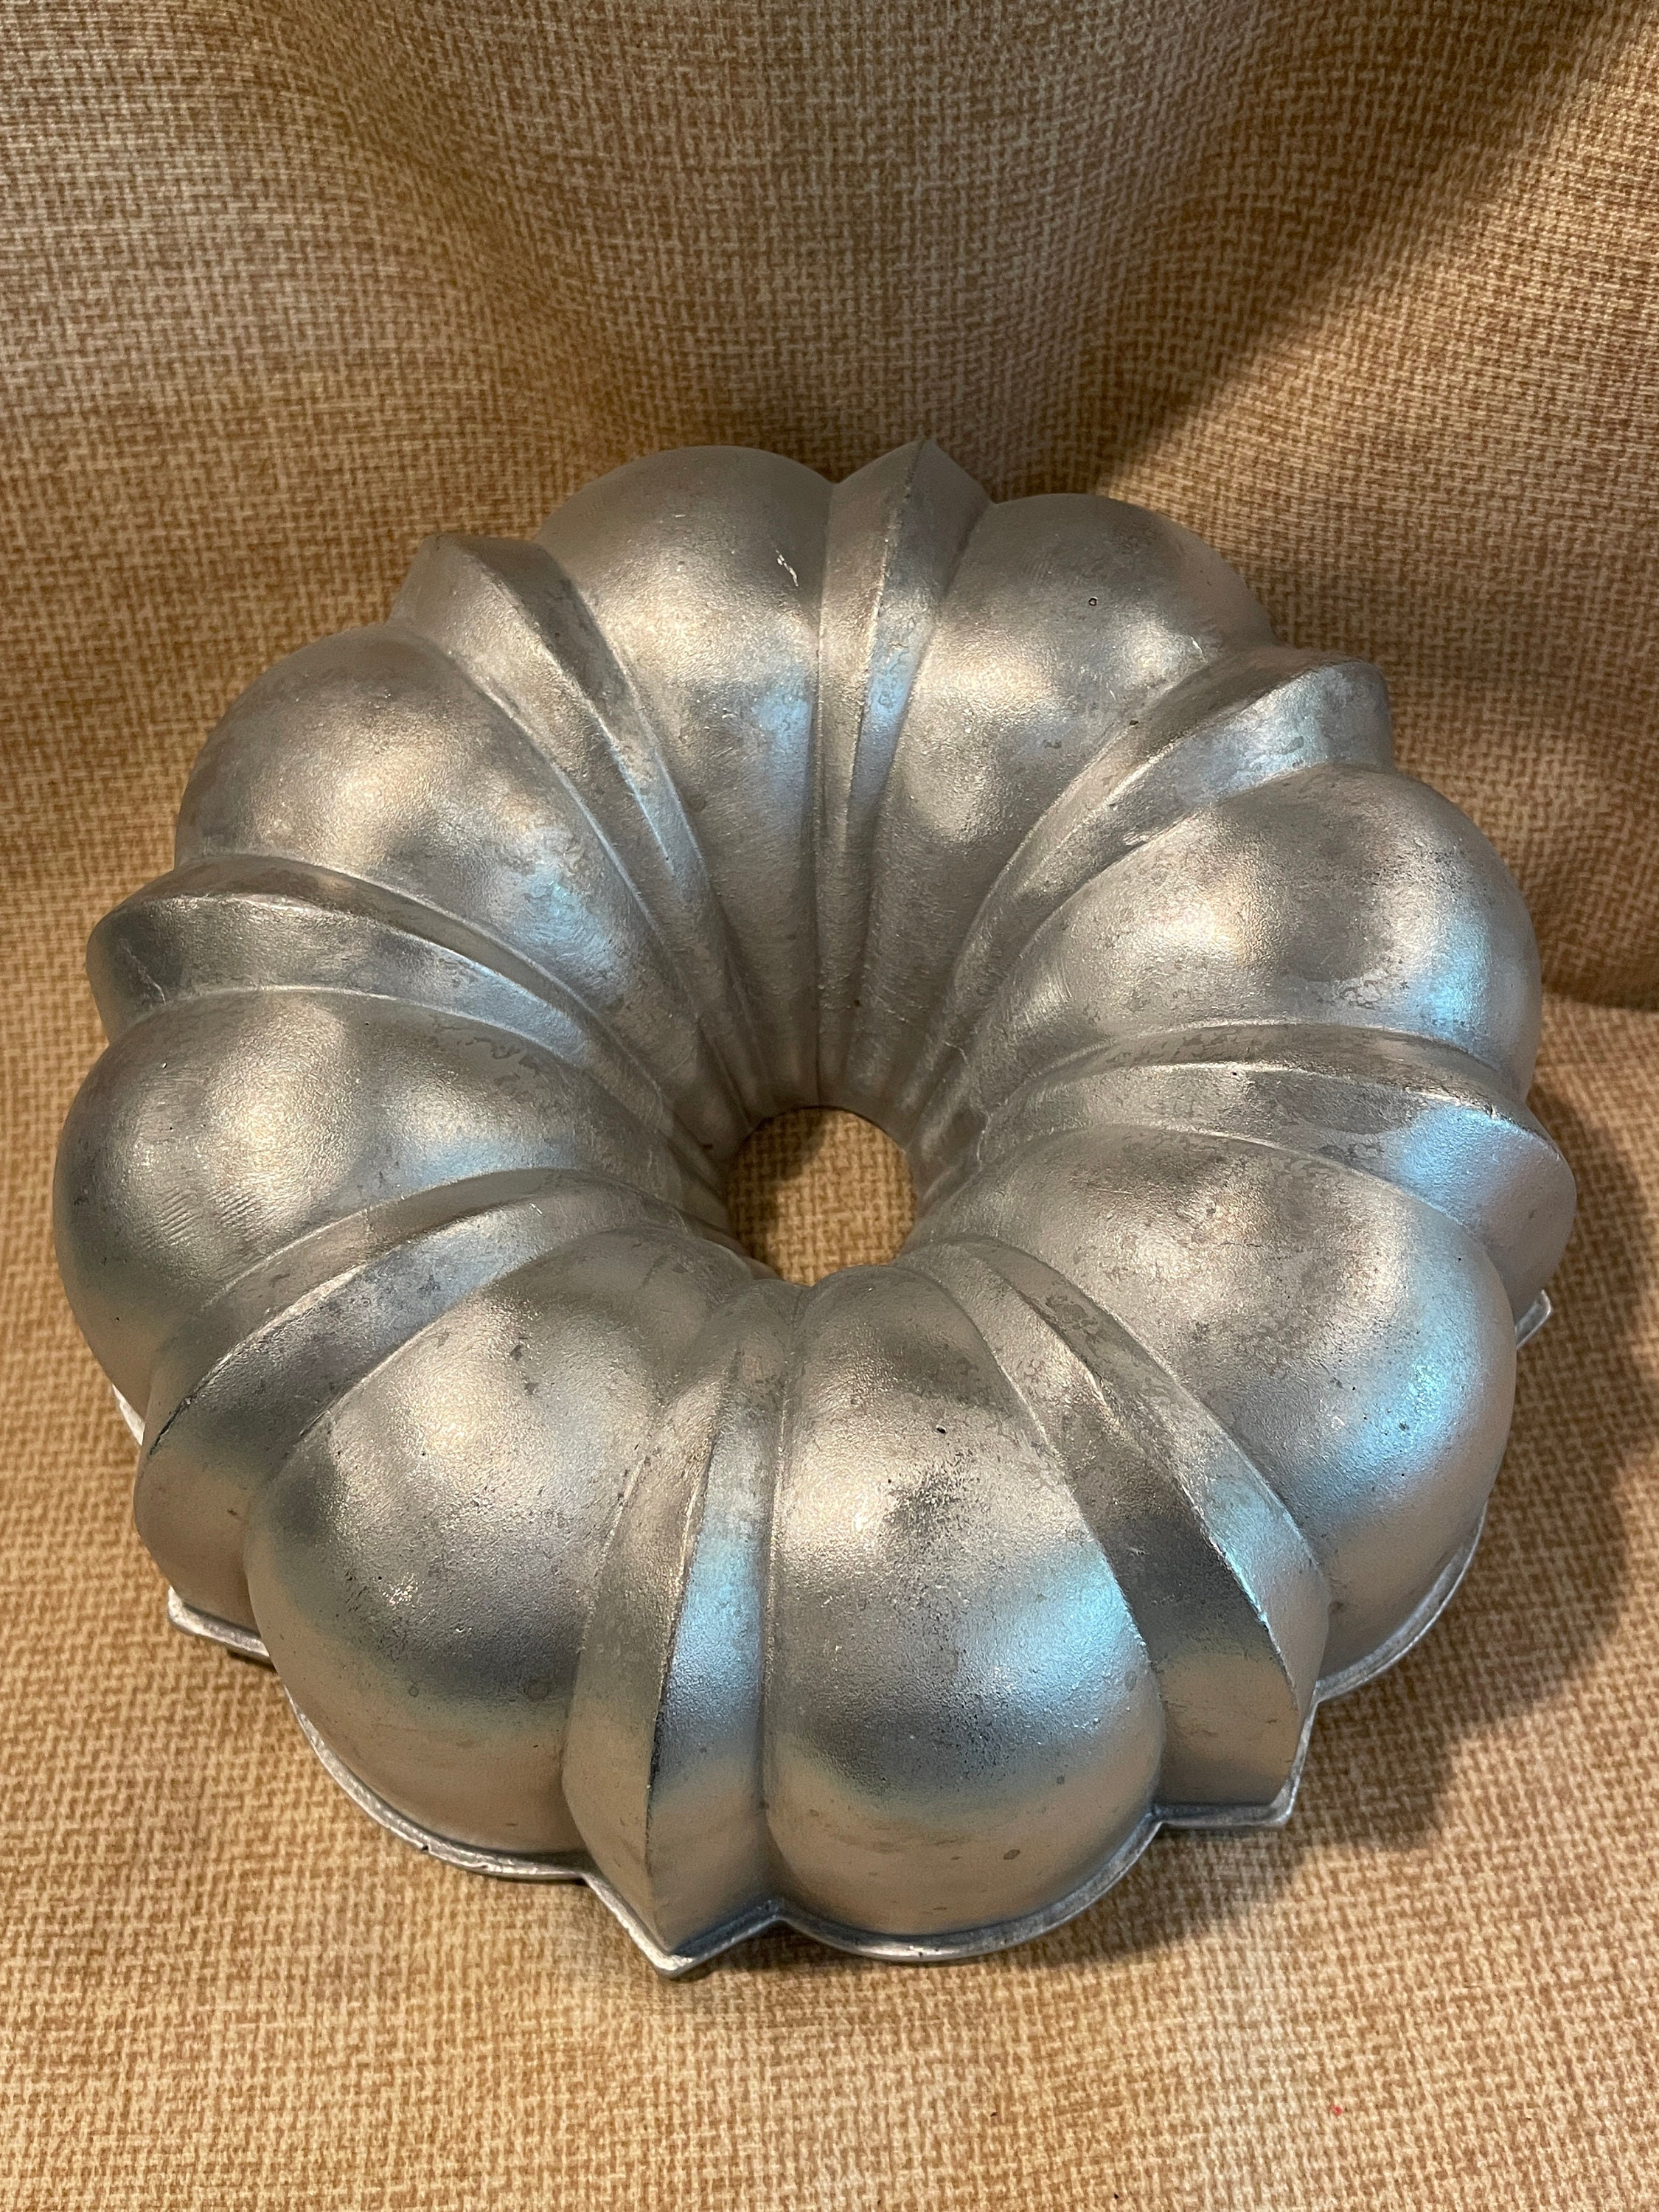 Bakery Restaurant Aluminium Bundt Cake Baking Pan Ring Cake Pan